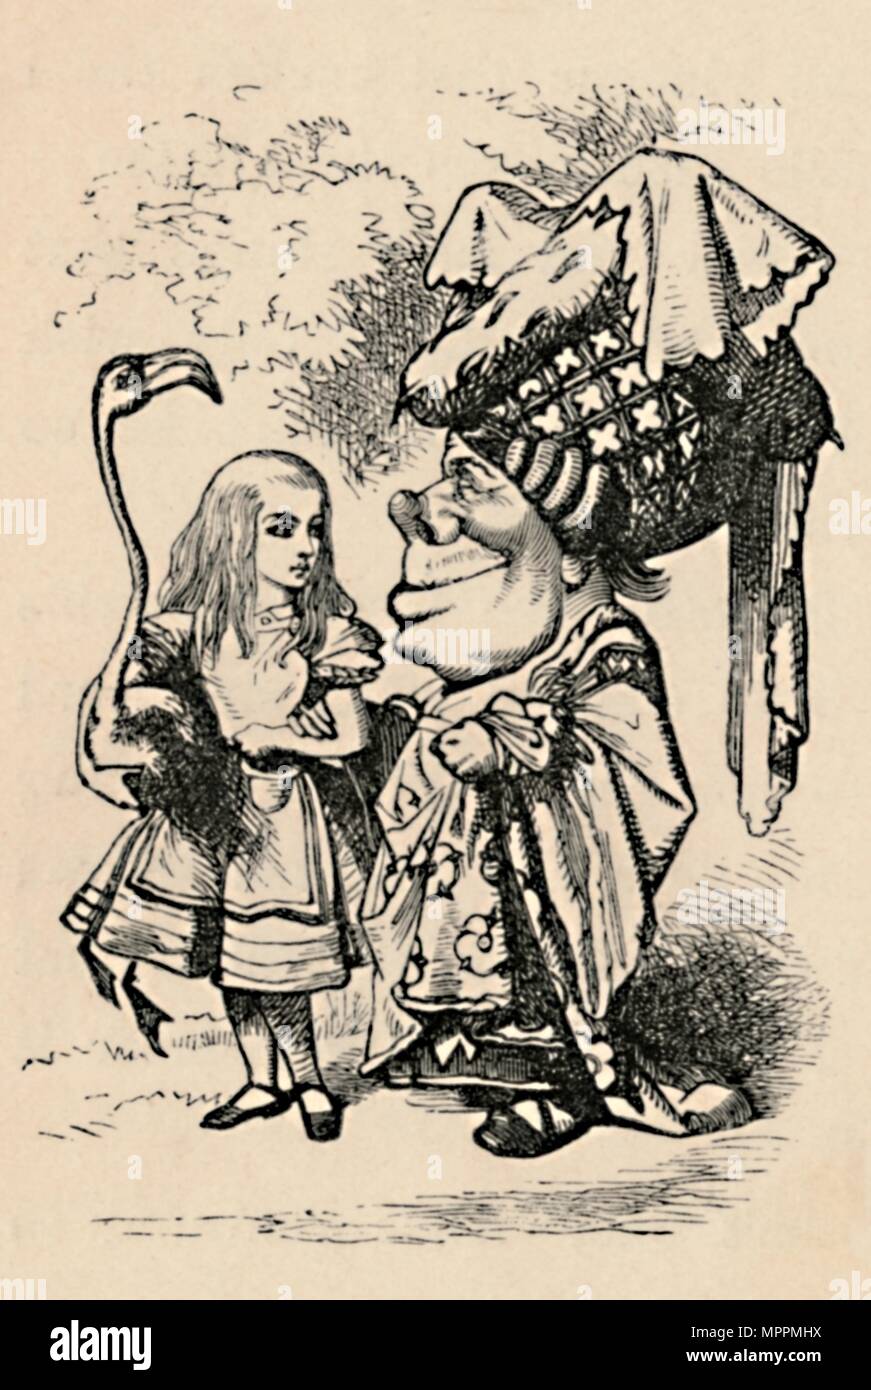 https://c8.alamy.com/comp/MPPMHX/alice-carrying-the-stork-and-talking-to-the-duchess-1889-artist-john-tenniel-MPPMHX.jpg